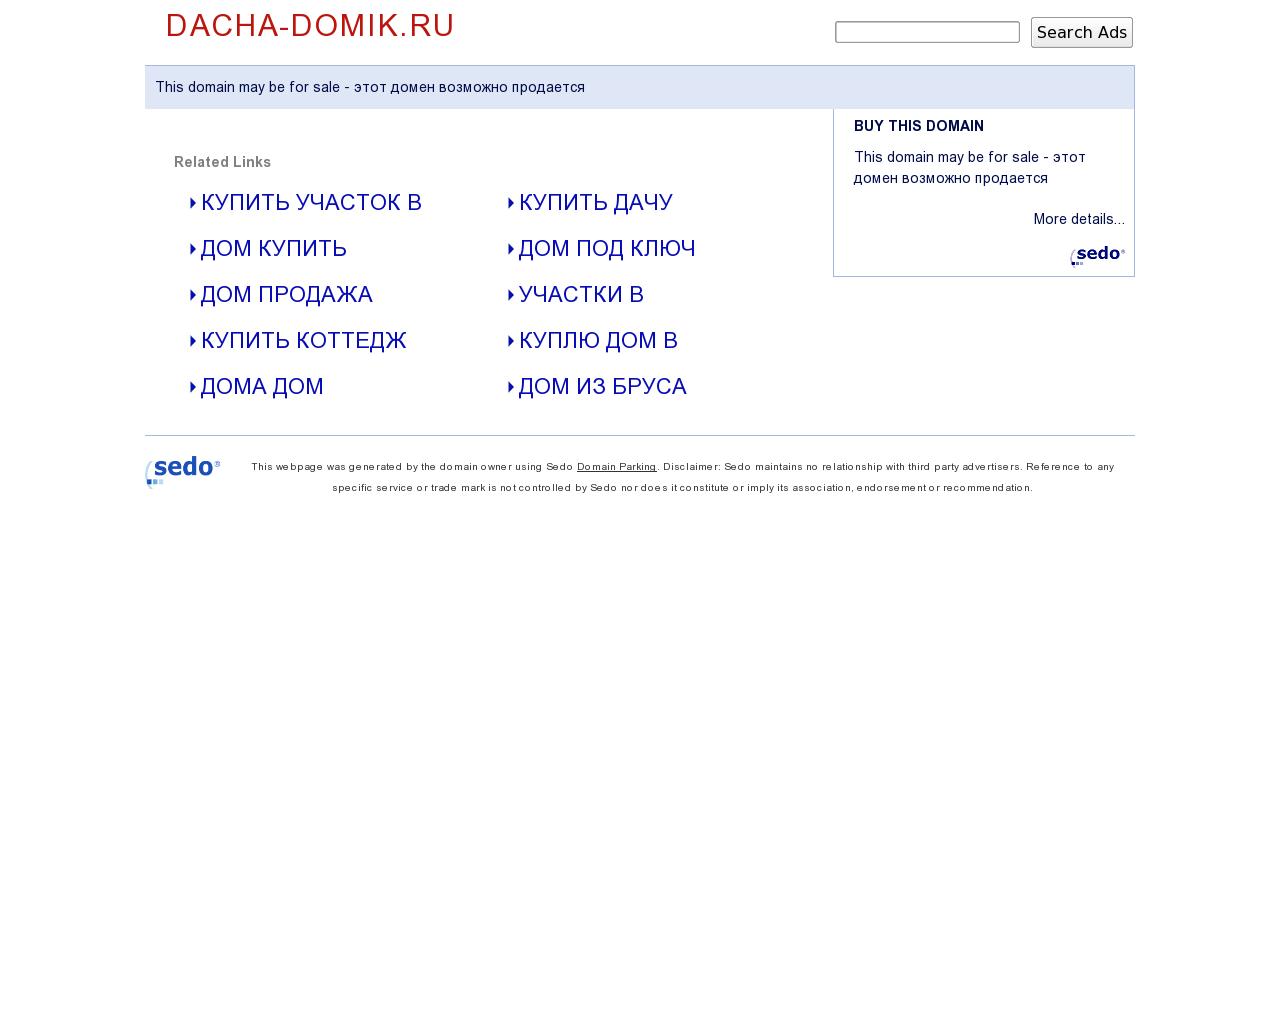 Изображение сайта dacha-domik.ru в разрешении 1280x1024